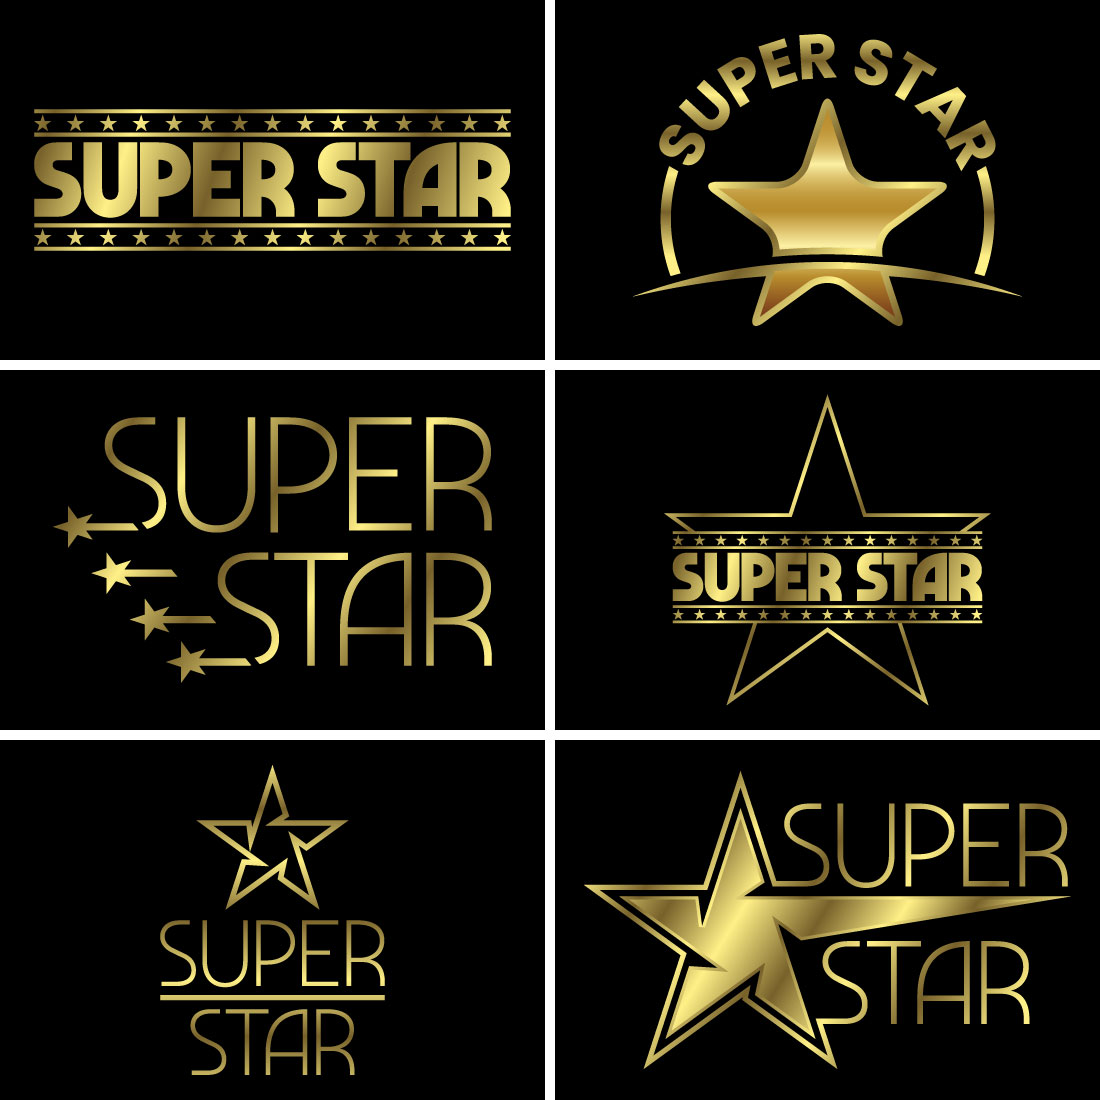 Golden Super Star Text Logo Sign Symbol Vector illustration graphic element on the dark background cover image.